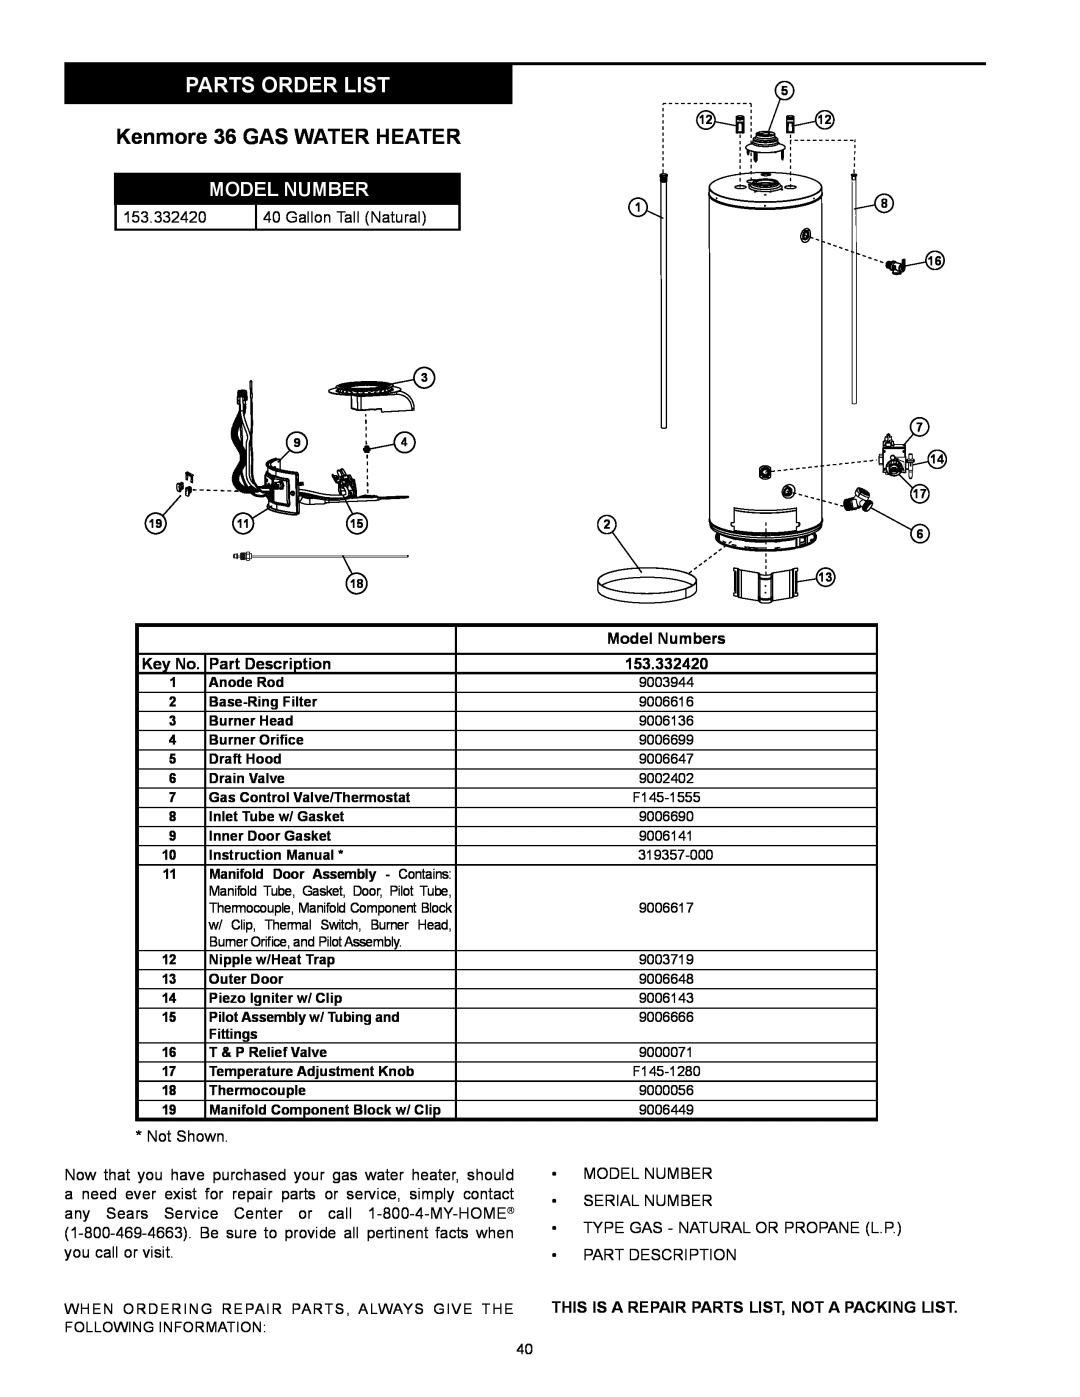 Kenmore 153.332.410 manual Parts Order List, Kenmore 36 GAS WATER HEATER, Model Numbers, Part Description 